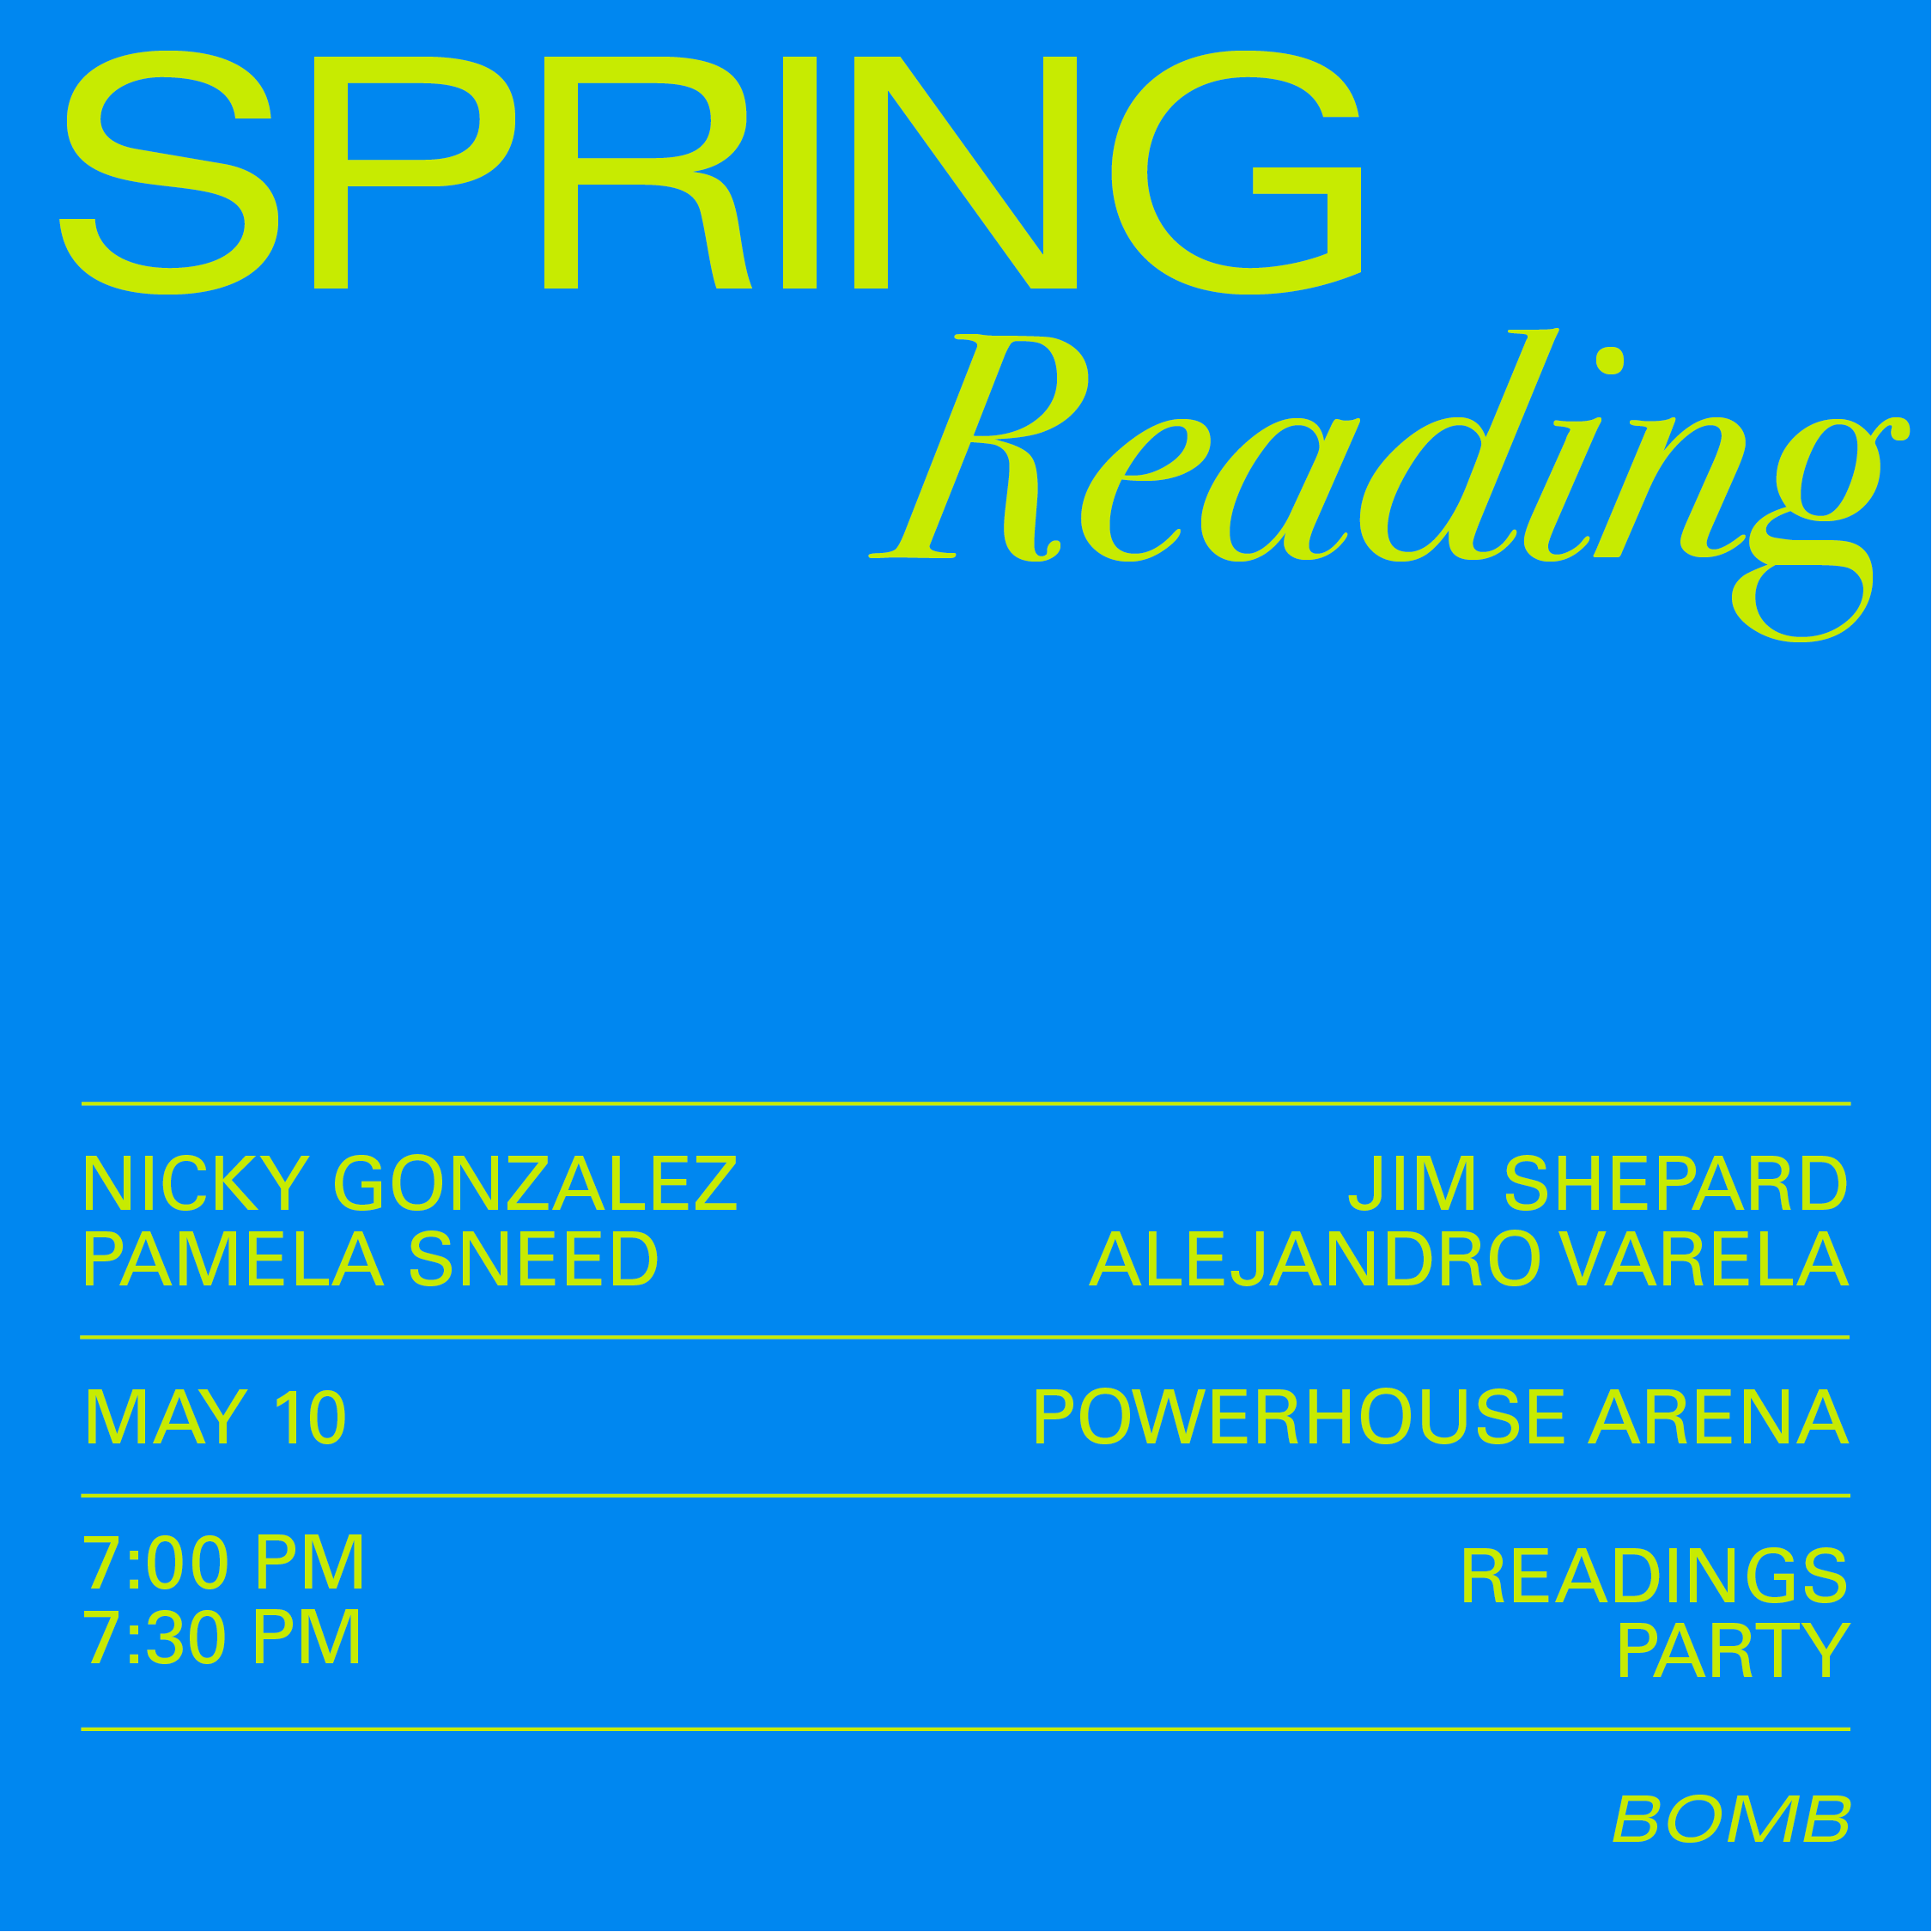 BOMB presents Spring Reading with Nicky Gonzalez, Pamela Sneed, Jim Shepard and Alejandro Varela